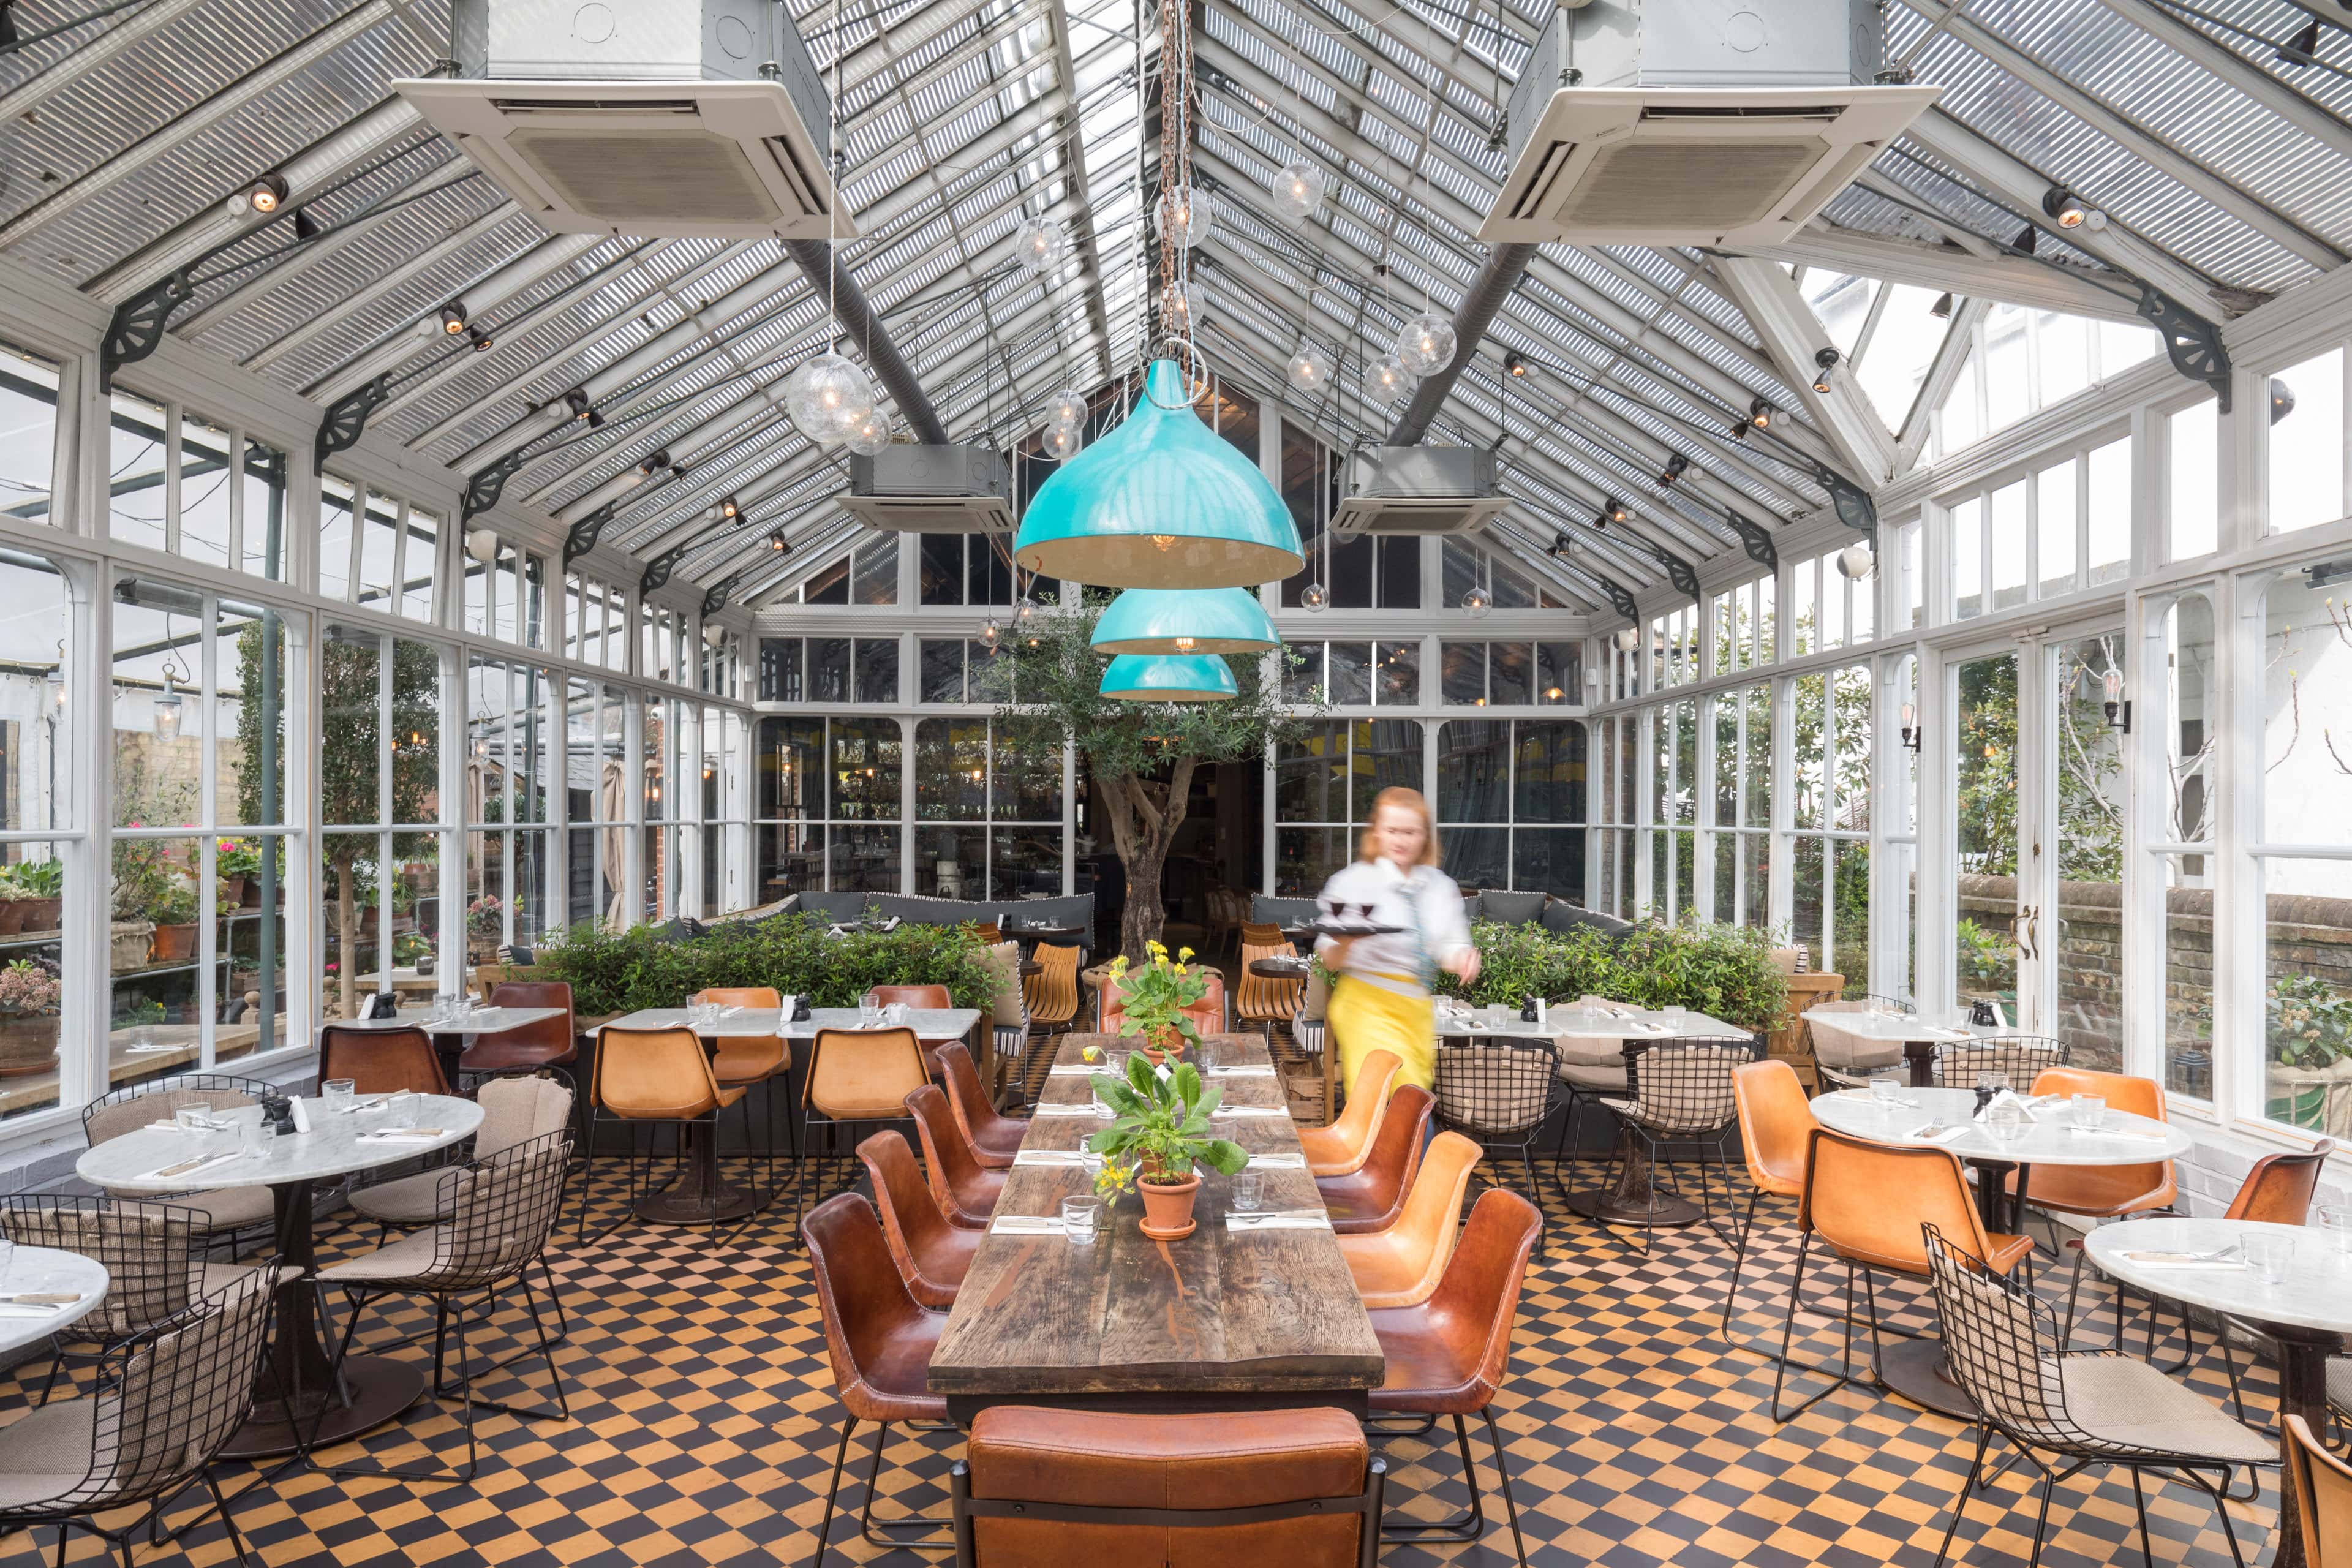 002 - 2019 - Gees Restaurant & Bar - Oxford - High res - Interior Restaurant Waitress 1 - Web Hero